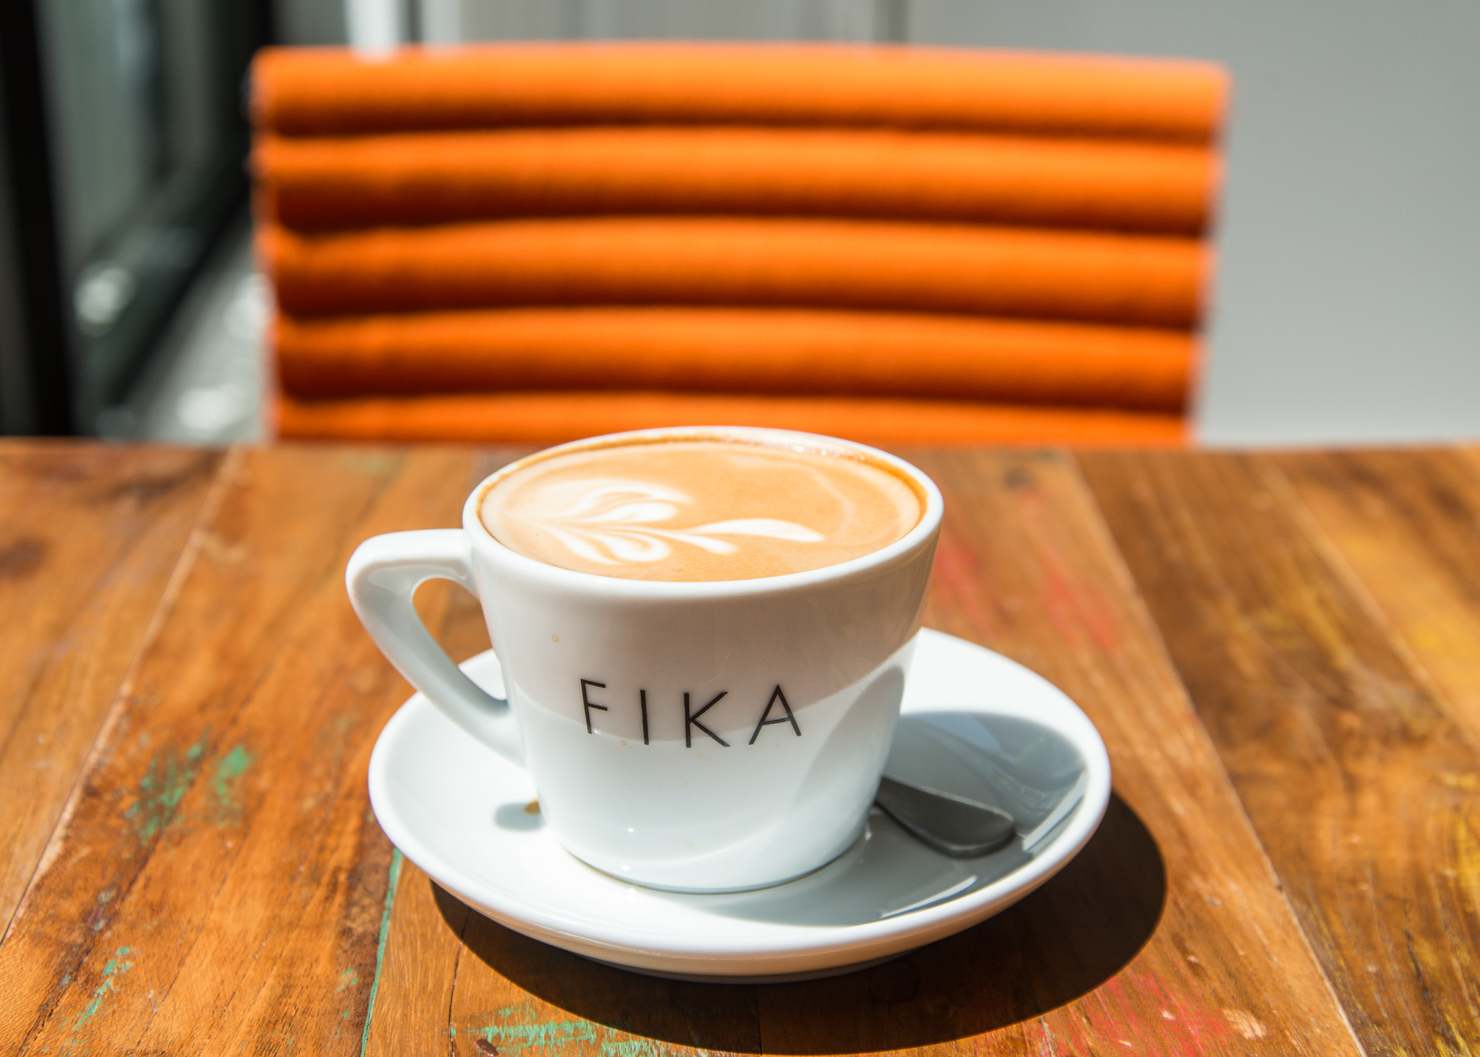 fika the art of swedish coffee break